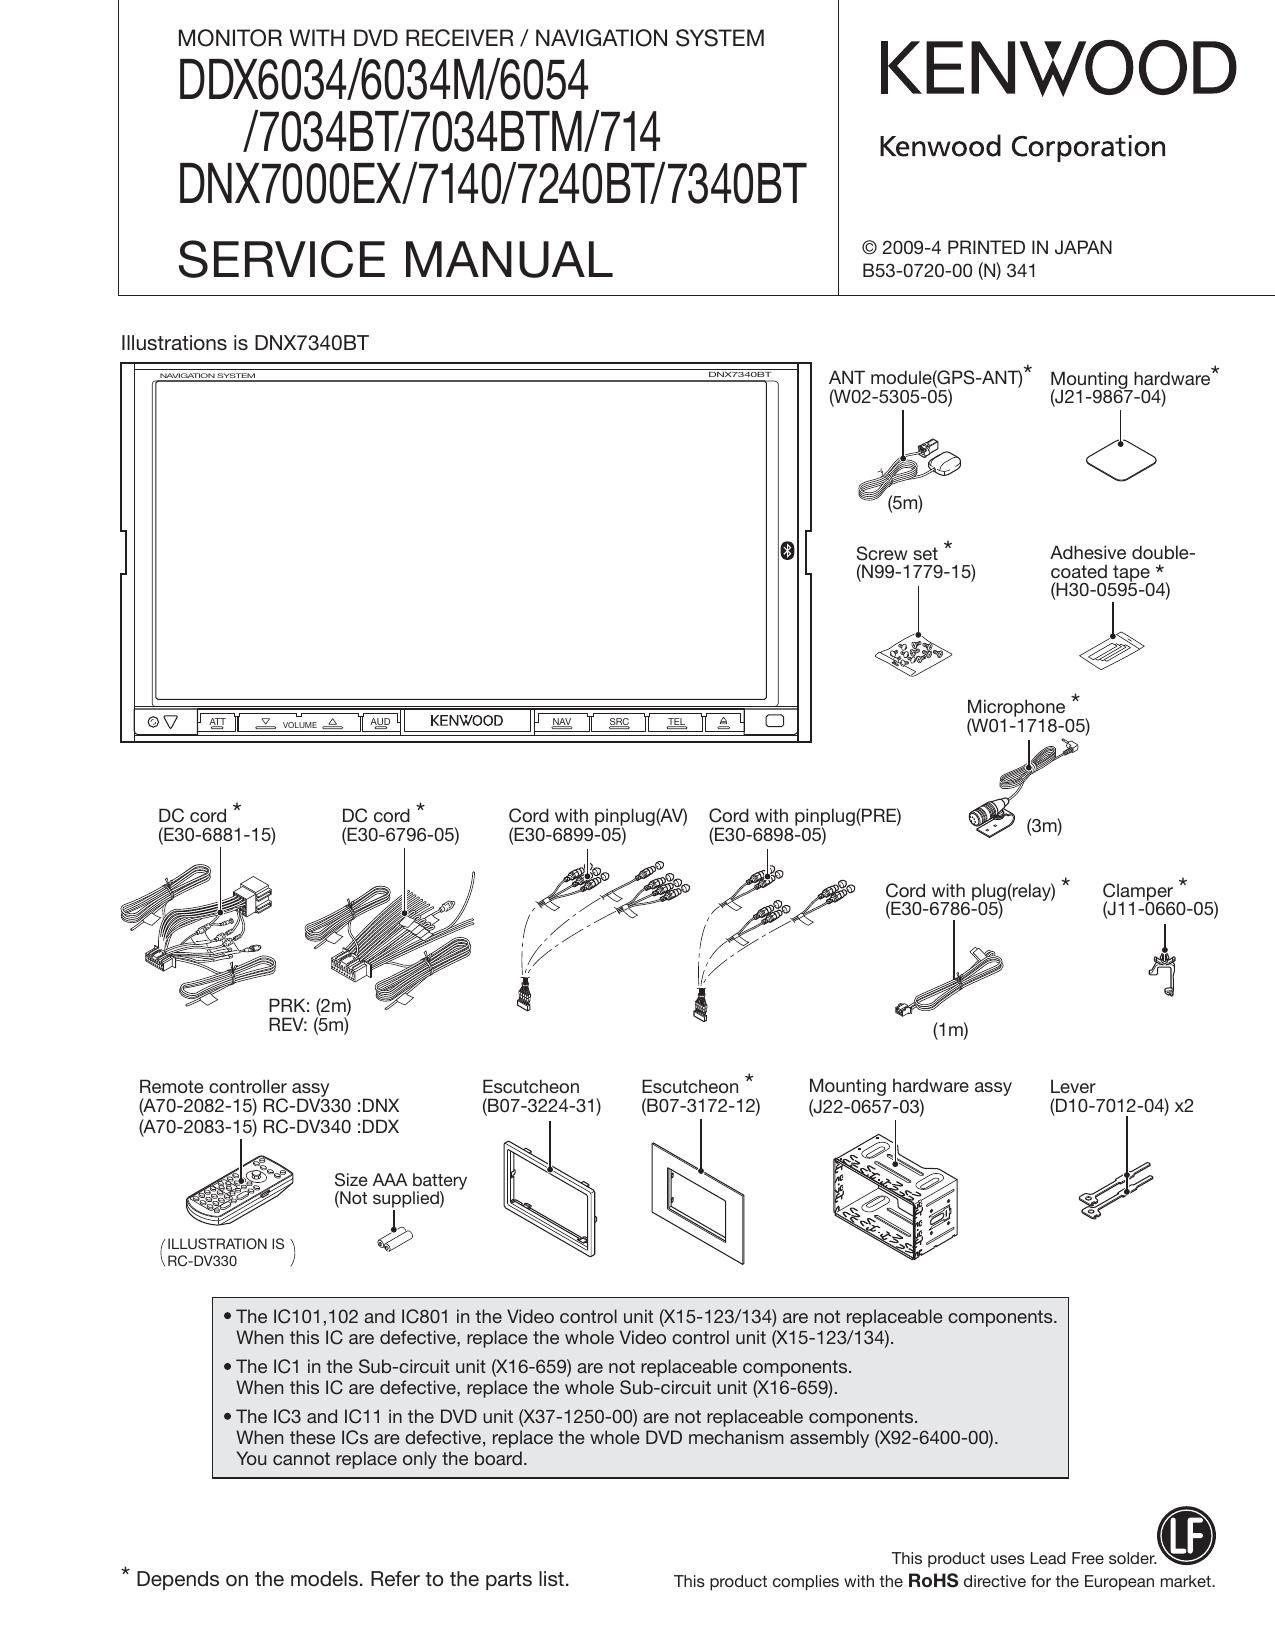 Kenwood DNX 7000 EX Service Manual